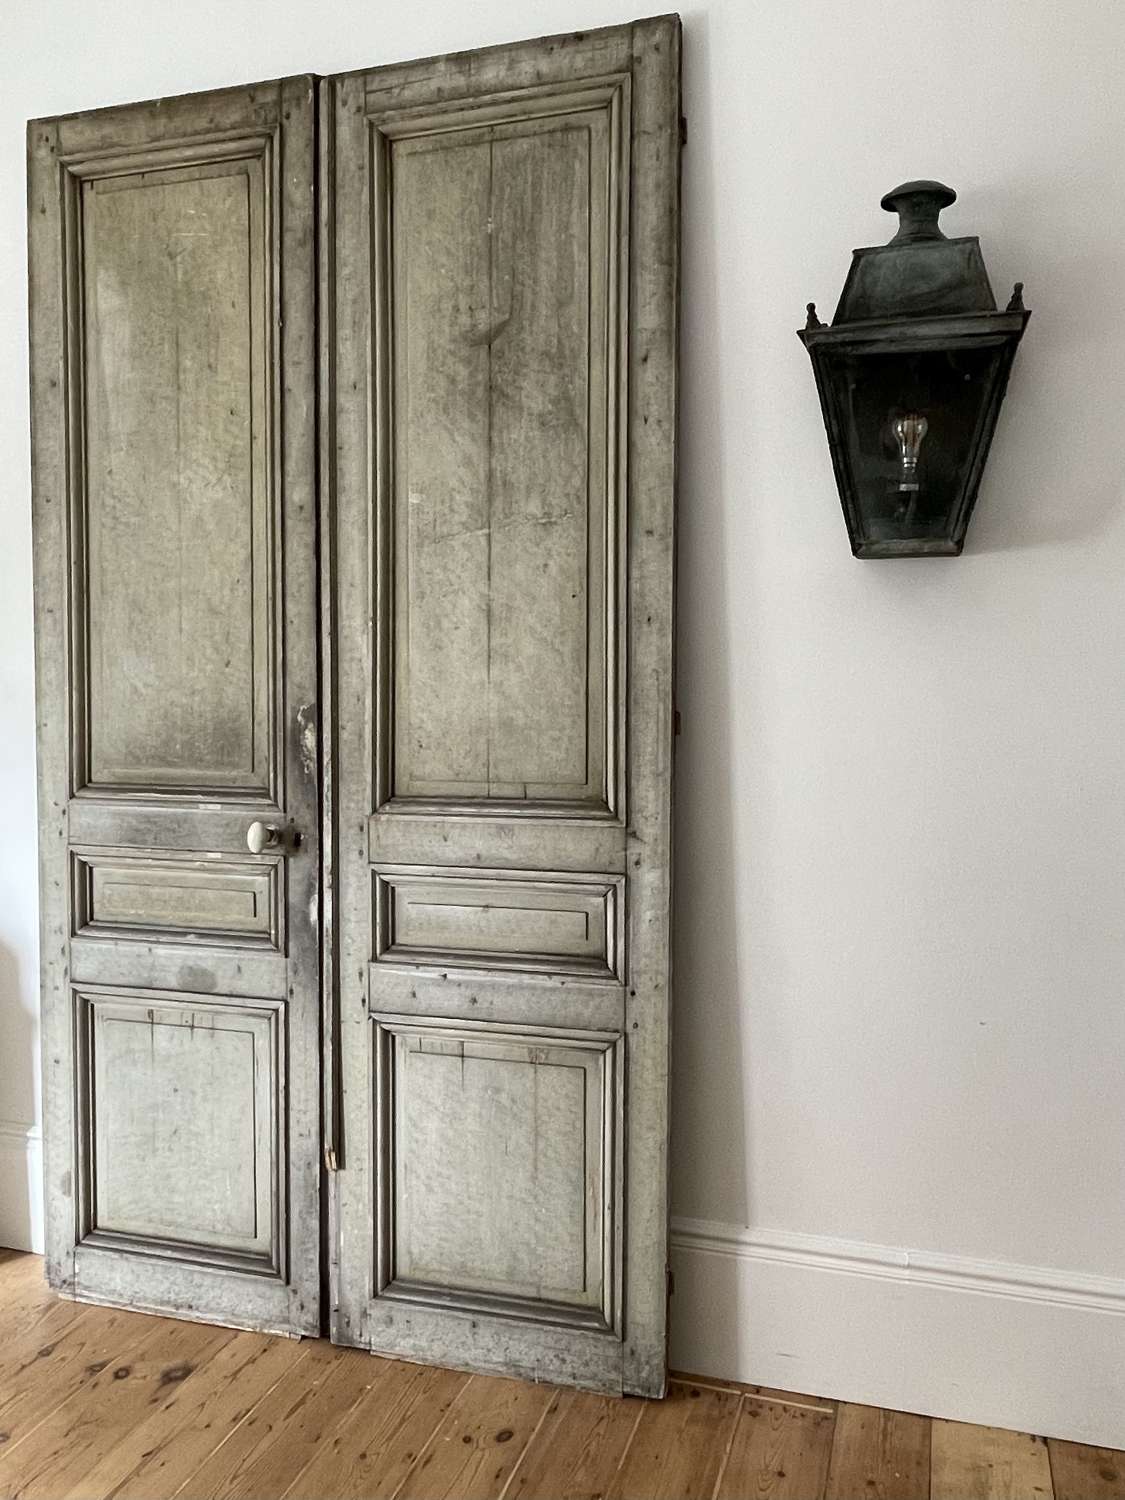 Pair of 19th century French oak doors